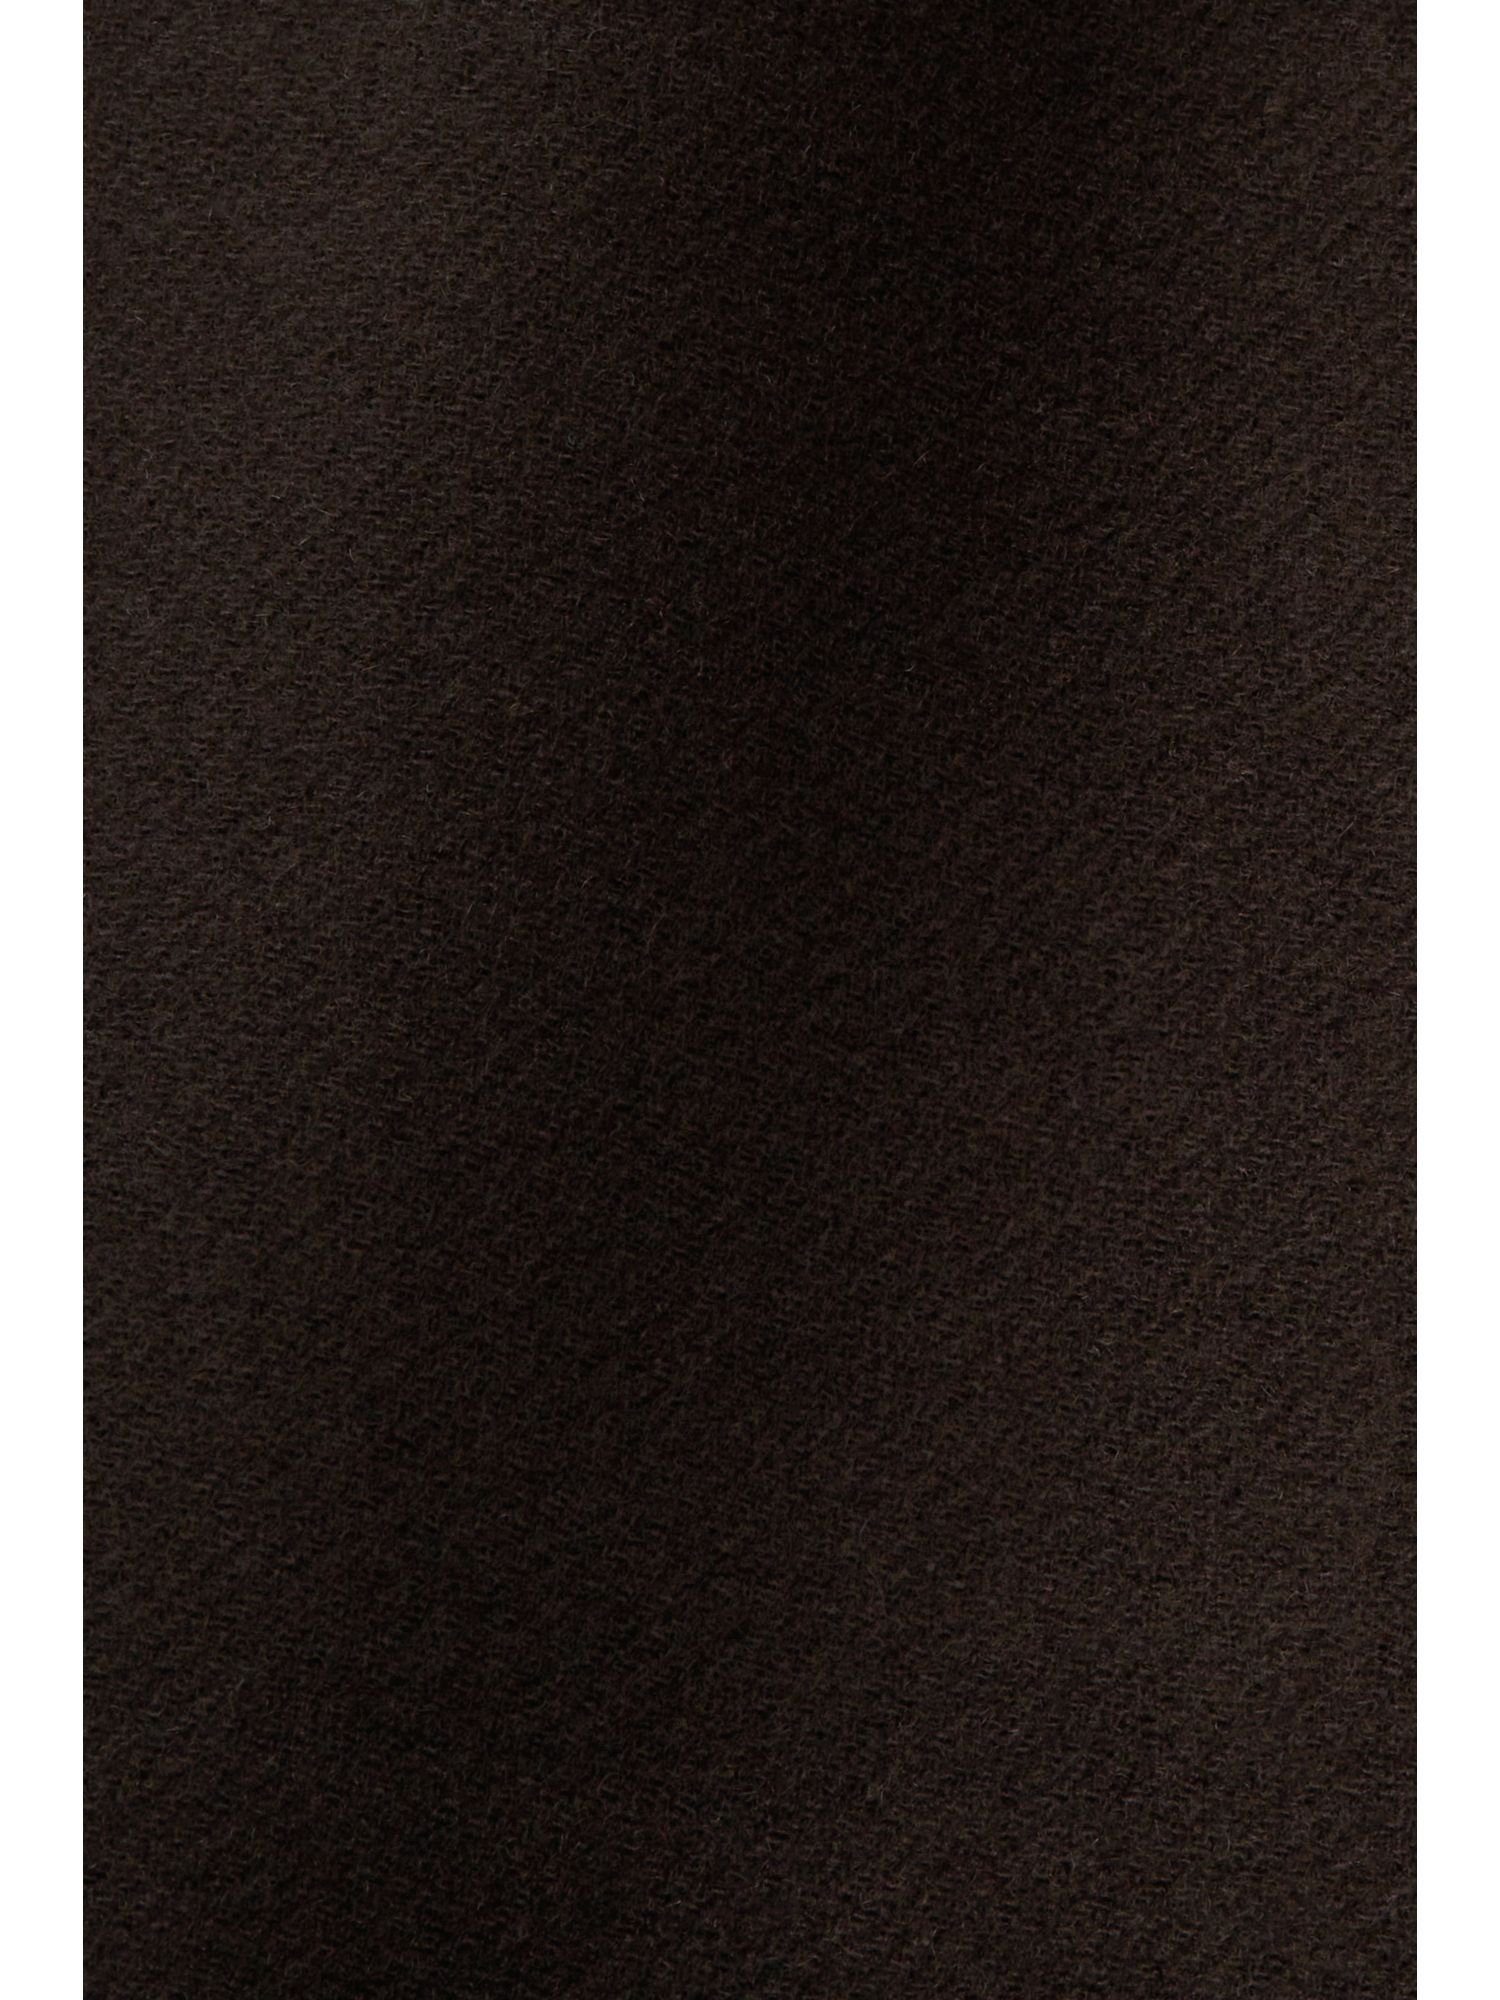 Langmantel Collection Coat Mac KHAKI aus Esprit Wolle DARK